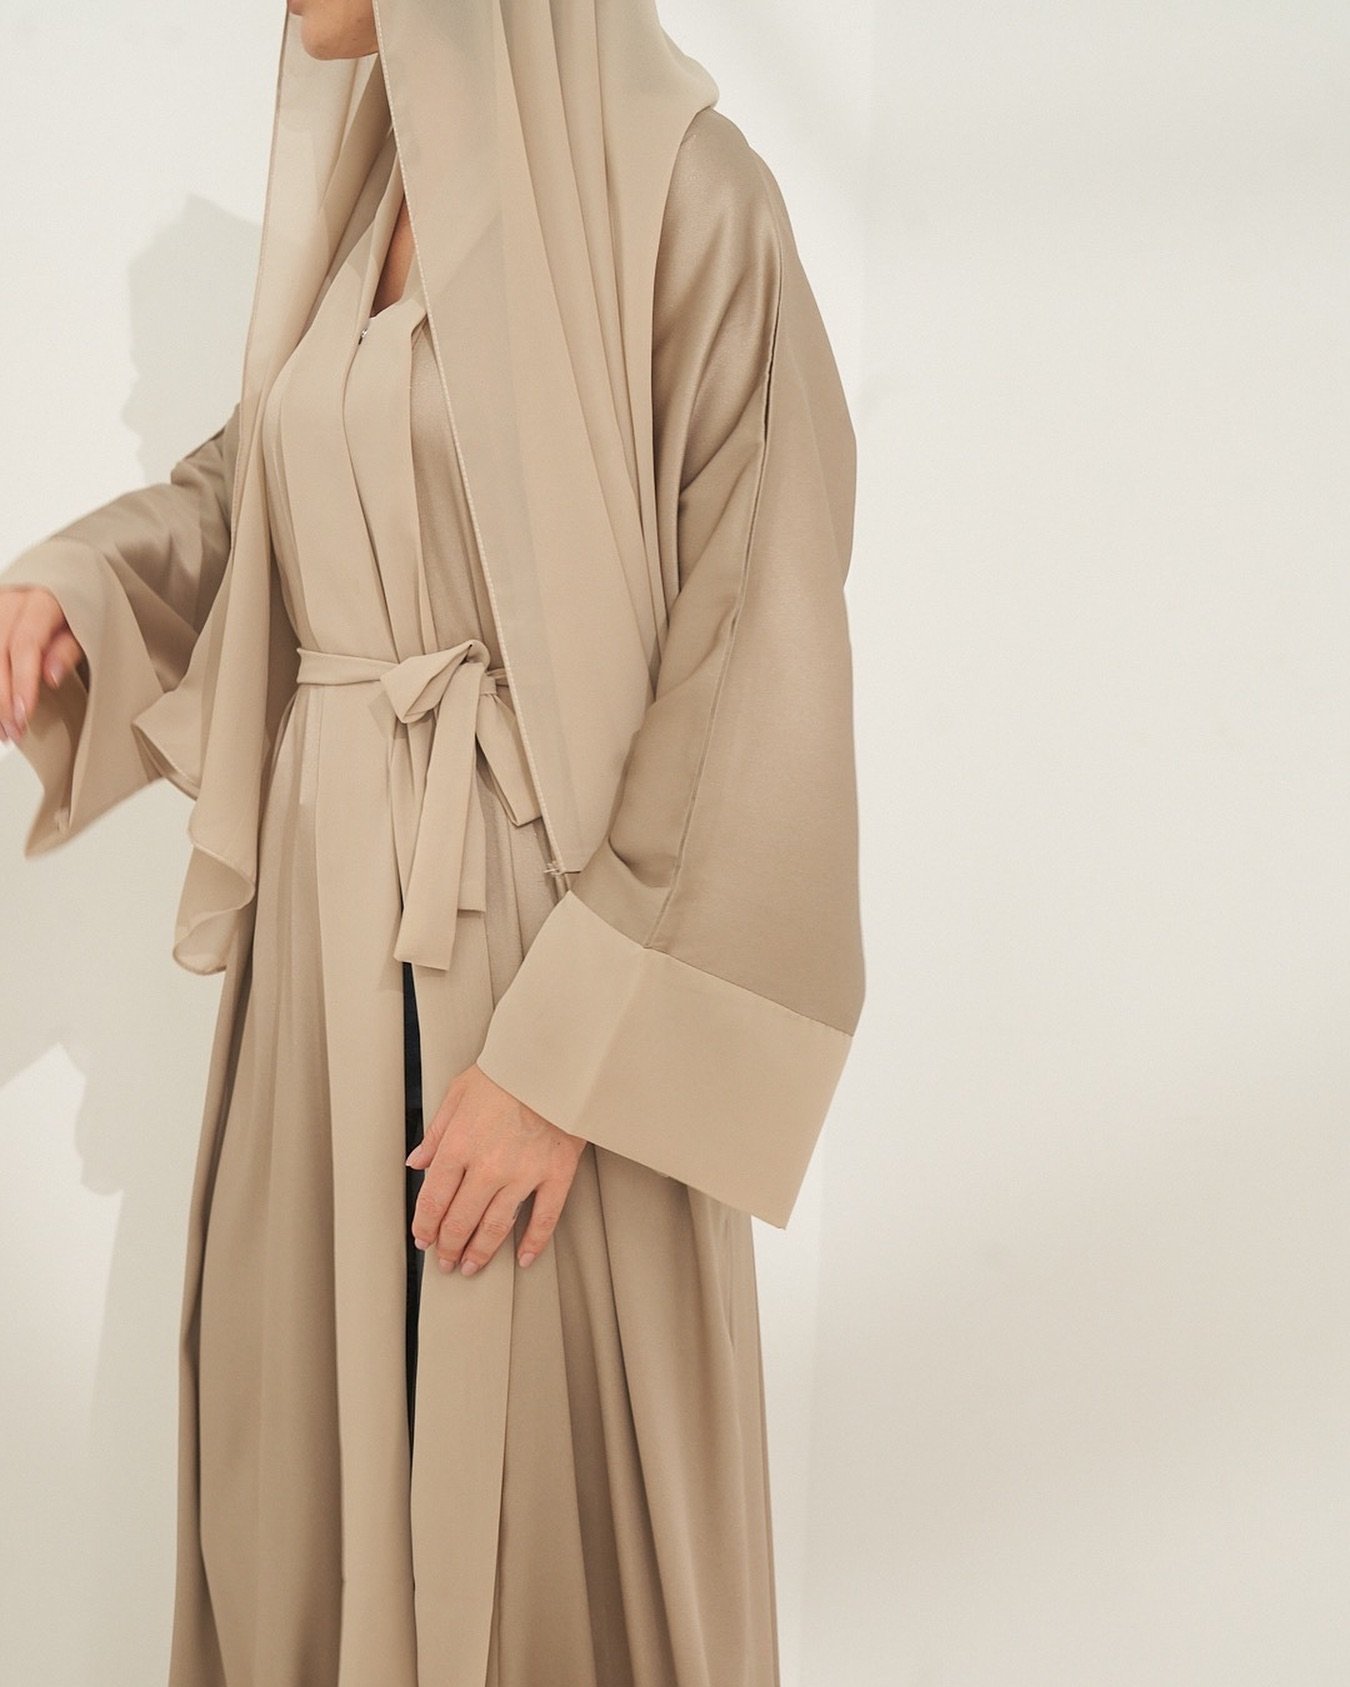 Timeless elegance in our tan classic abaya 🕊️
DM to purchase 
Same day shipping available 🚚 
Worldwide DHL express shipping 🌎 

#classicsthelabel #modestwear #newarrivals #abayadubai #kaftan #dubainewarrivals